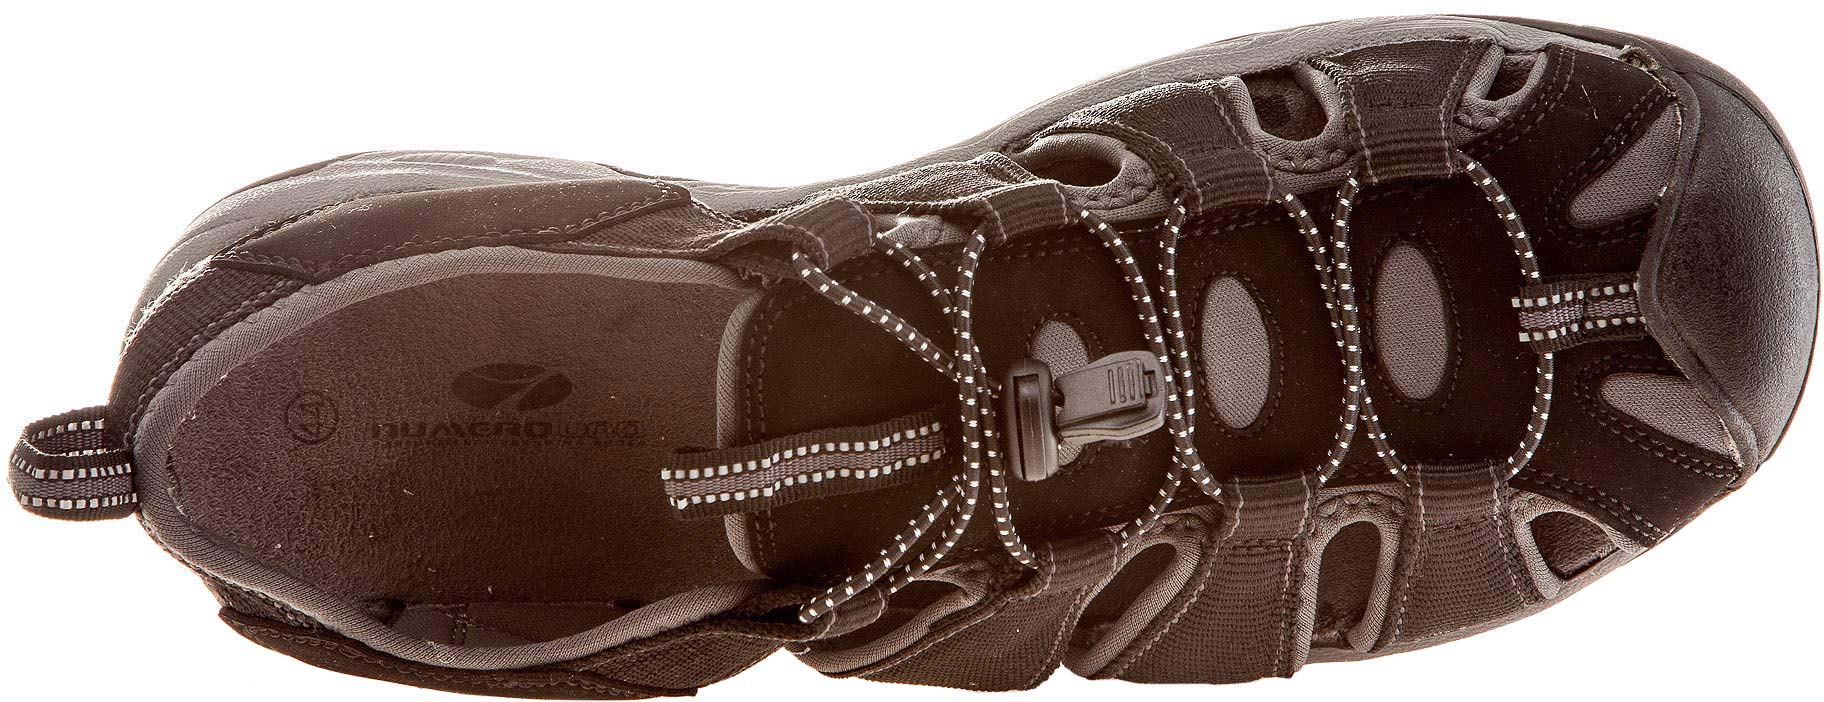 PARDUS M - Men’s trekking sandals